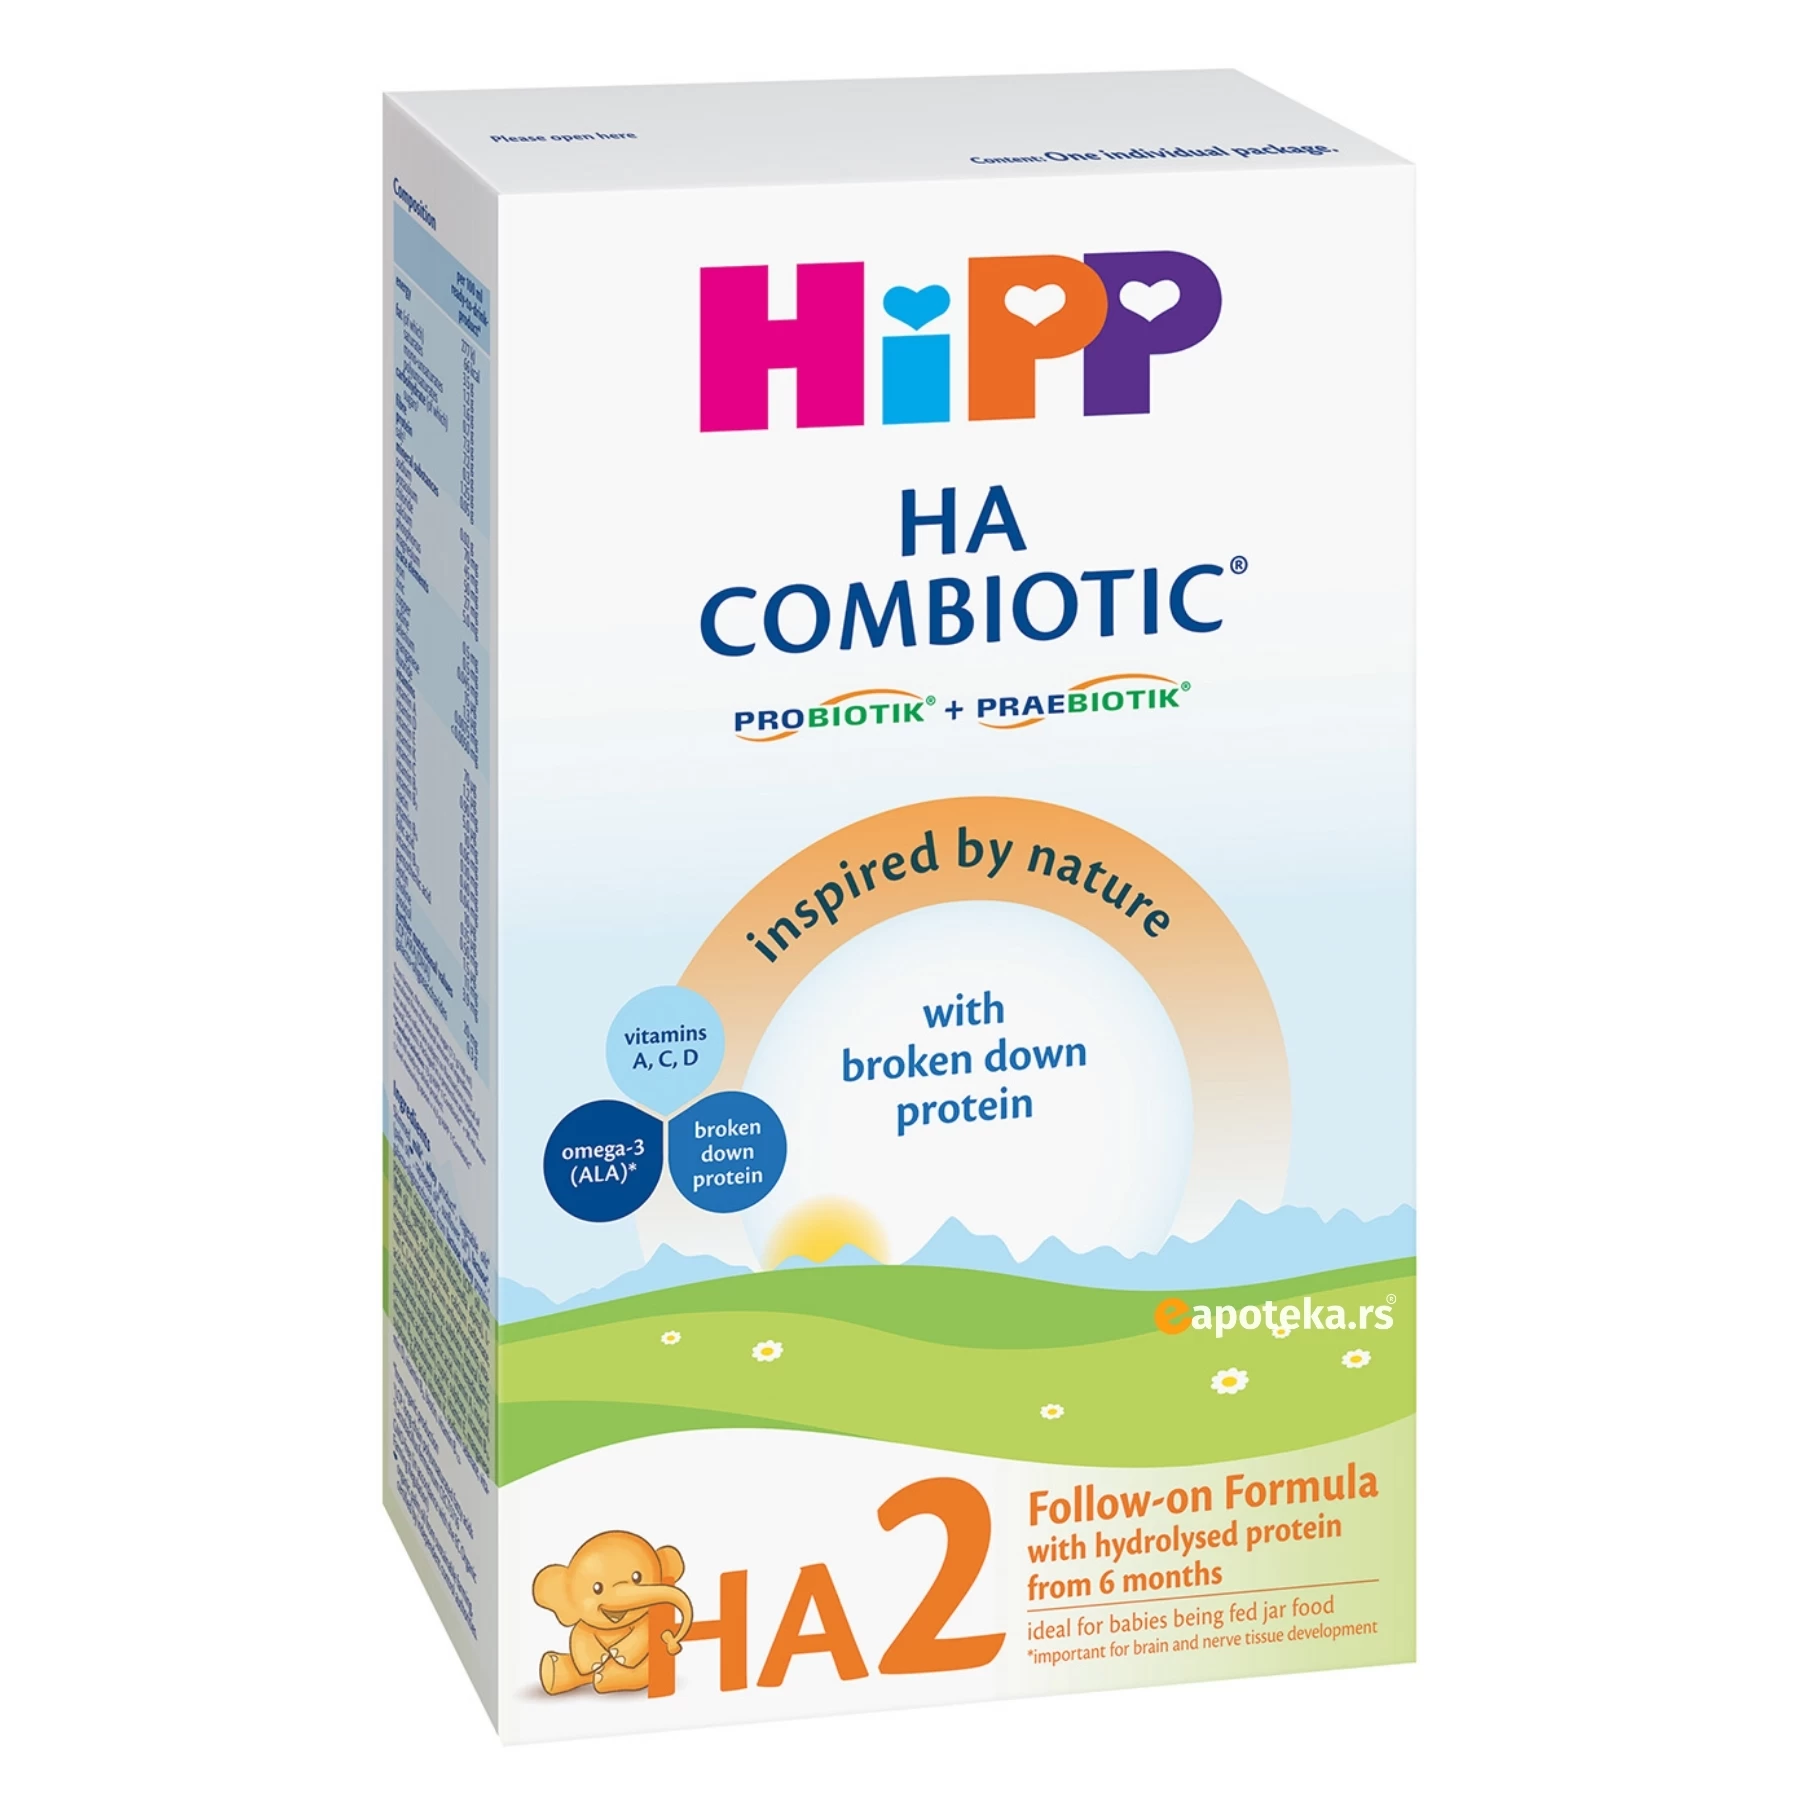 HIPP Mleko za Bebe HA 2 COMBIOTIC® 350g